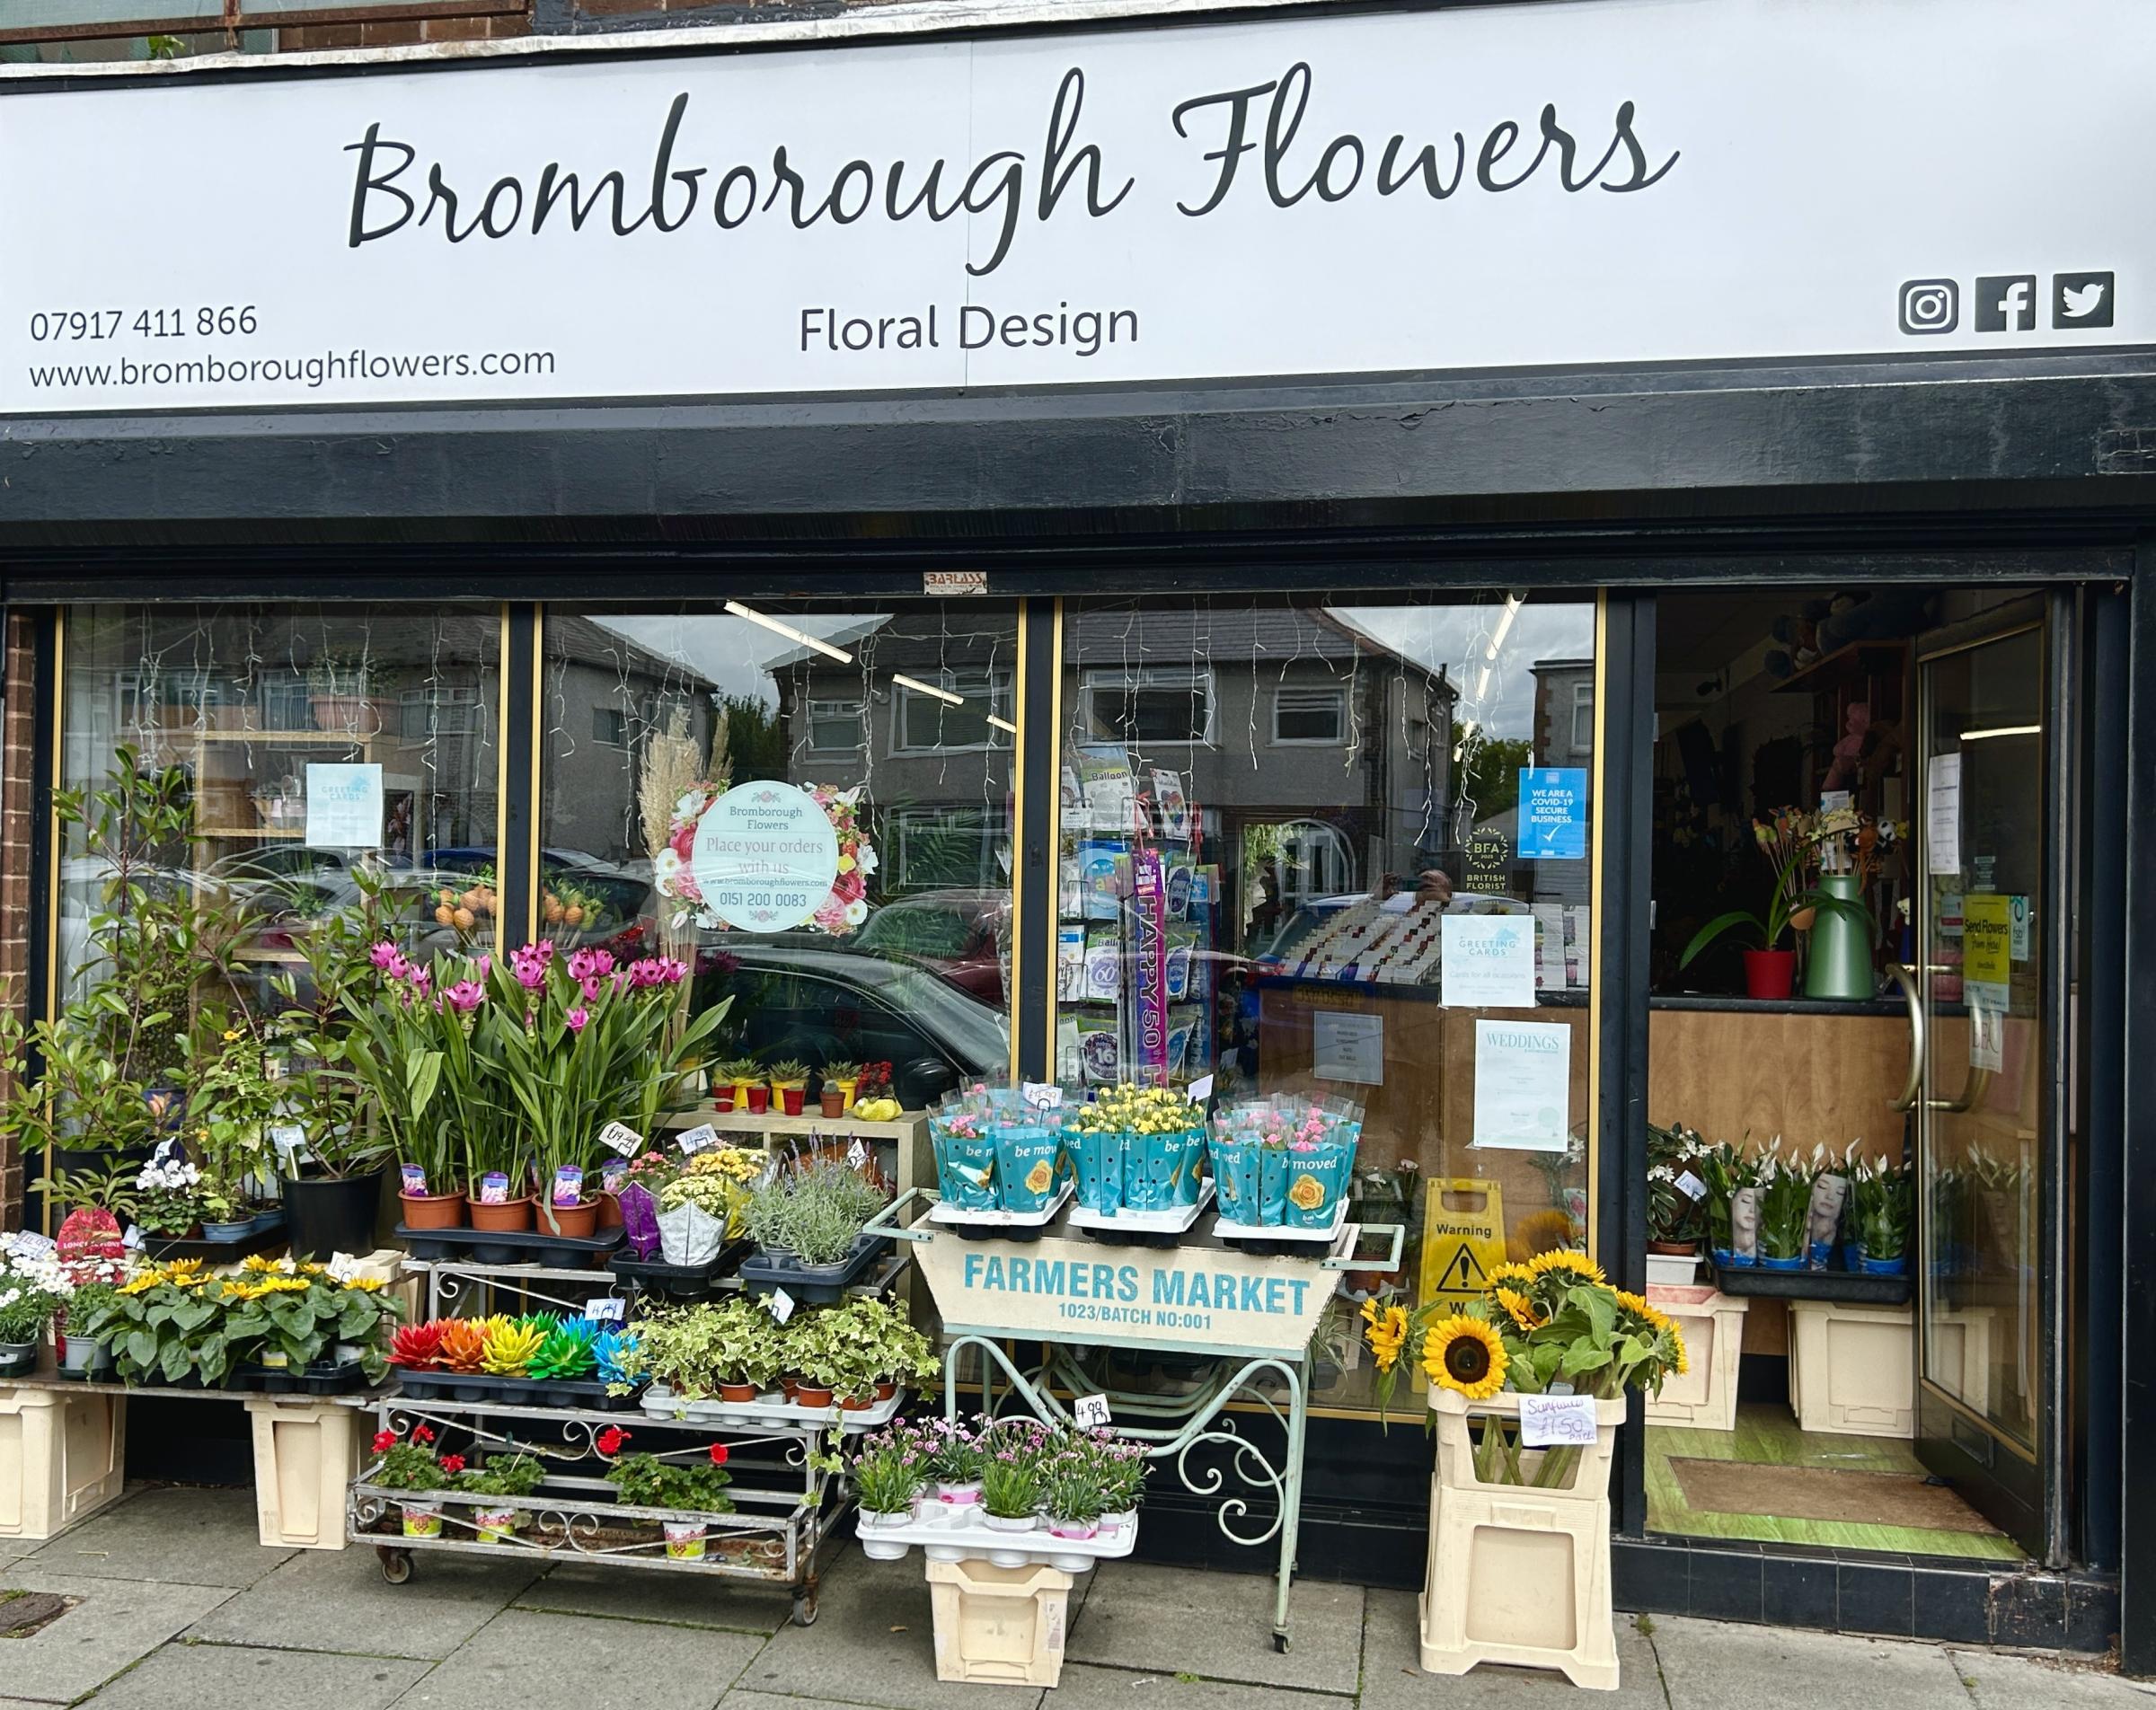 Bromborough Flowers opened on Allport Road in 2020